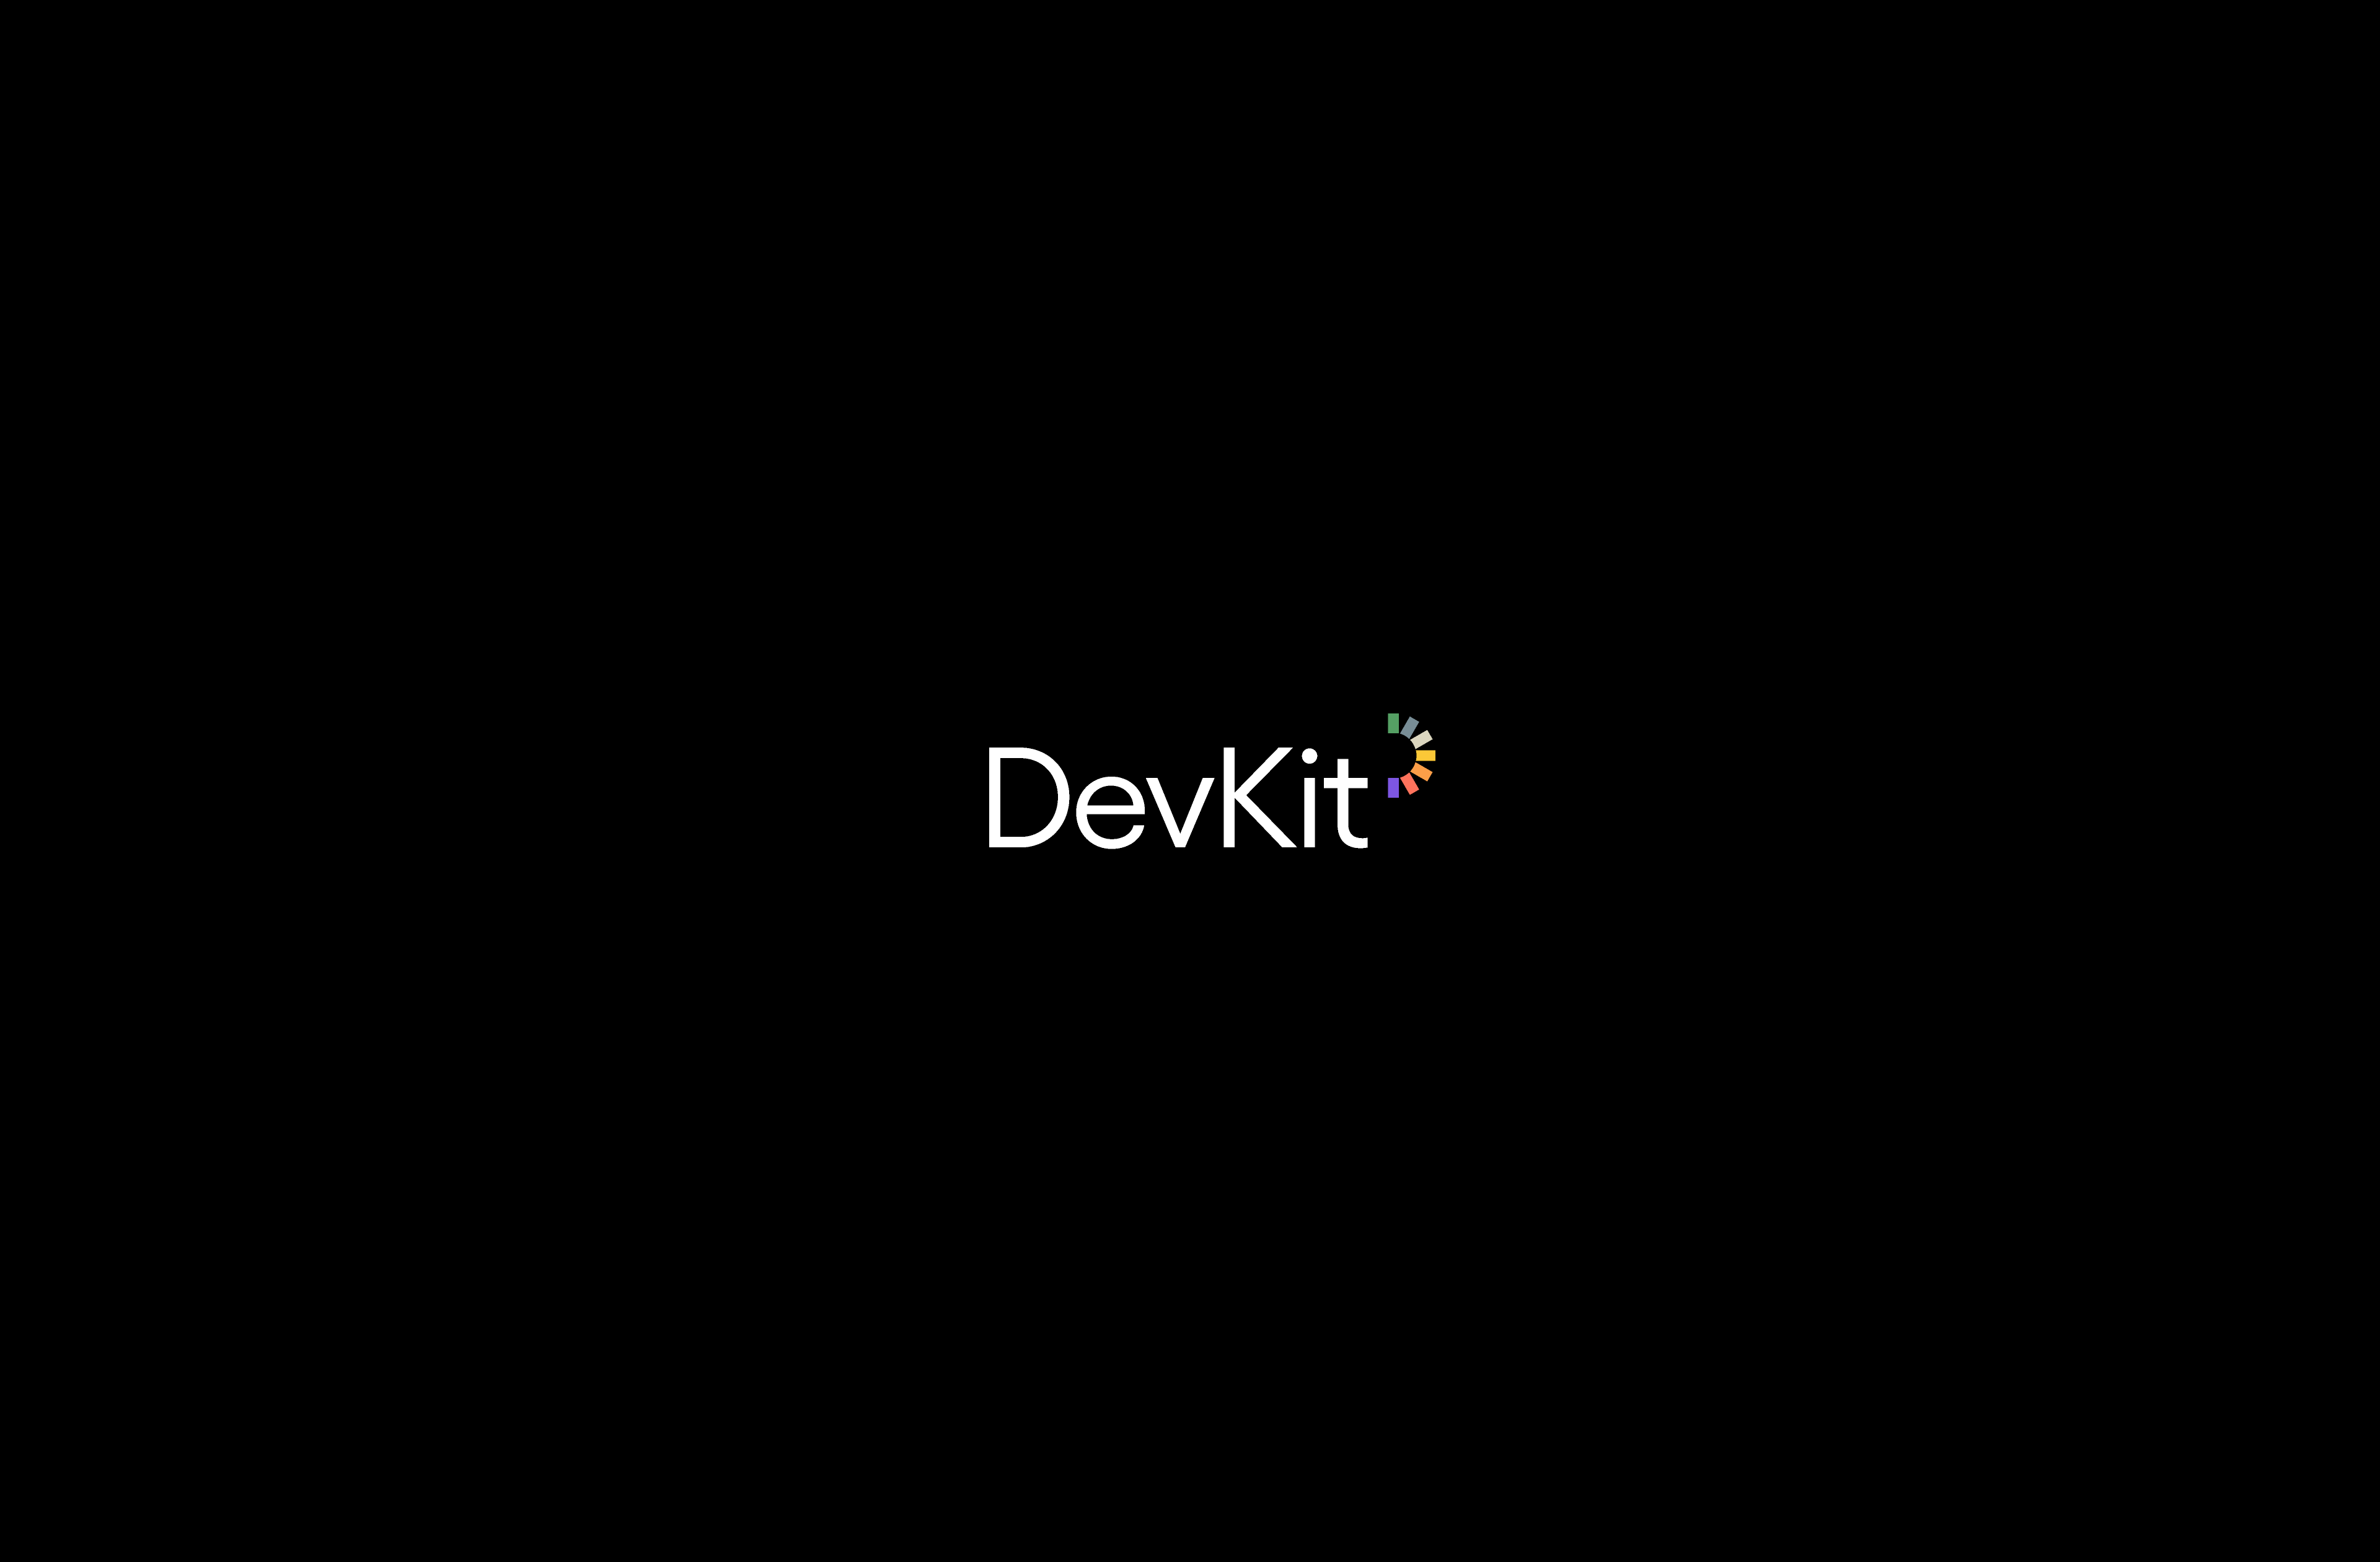 DK-web-logo-colour-N